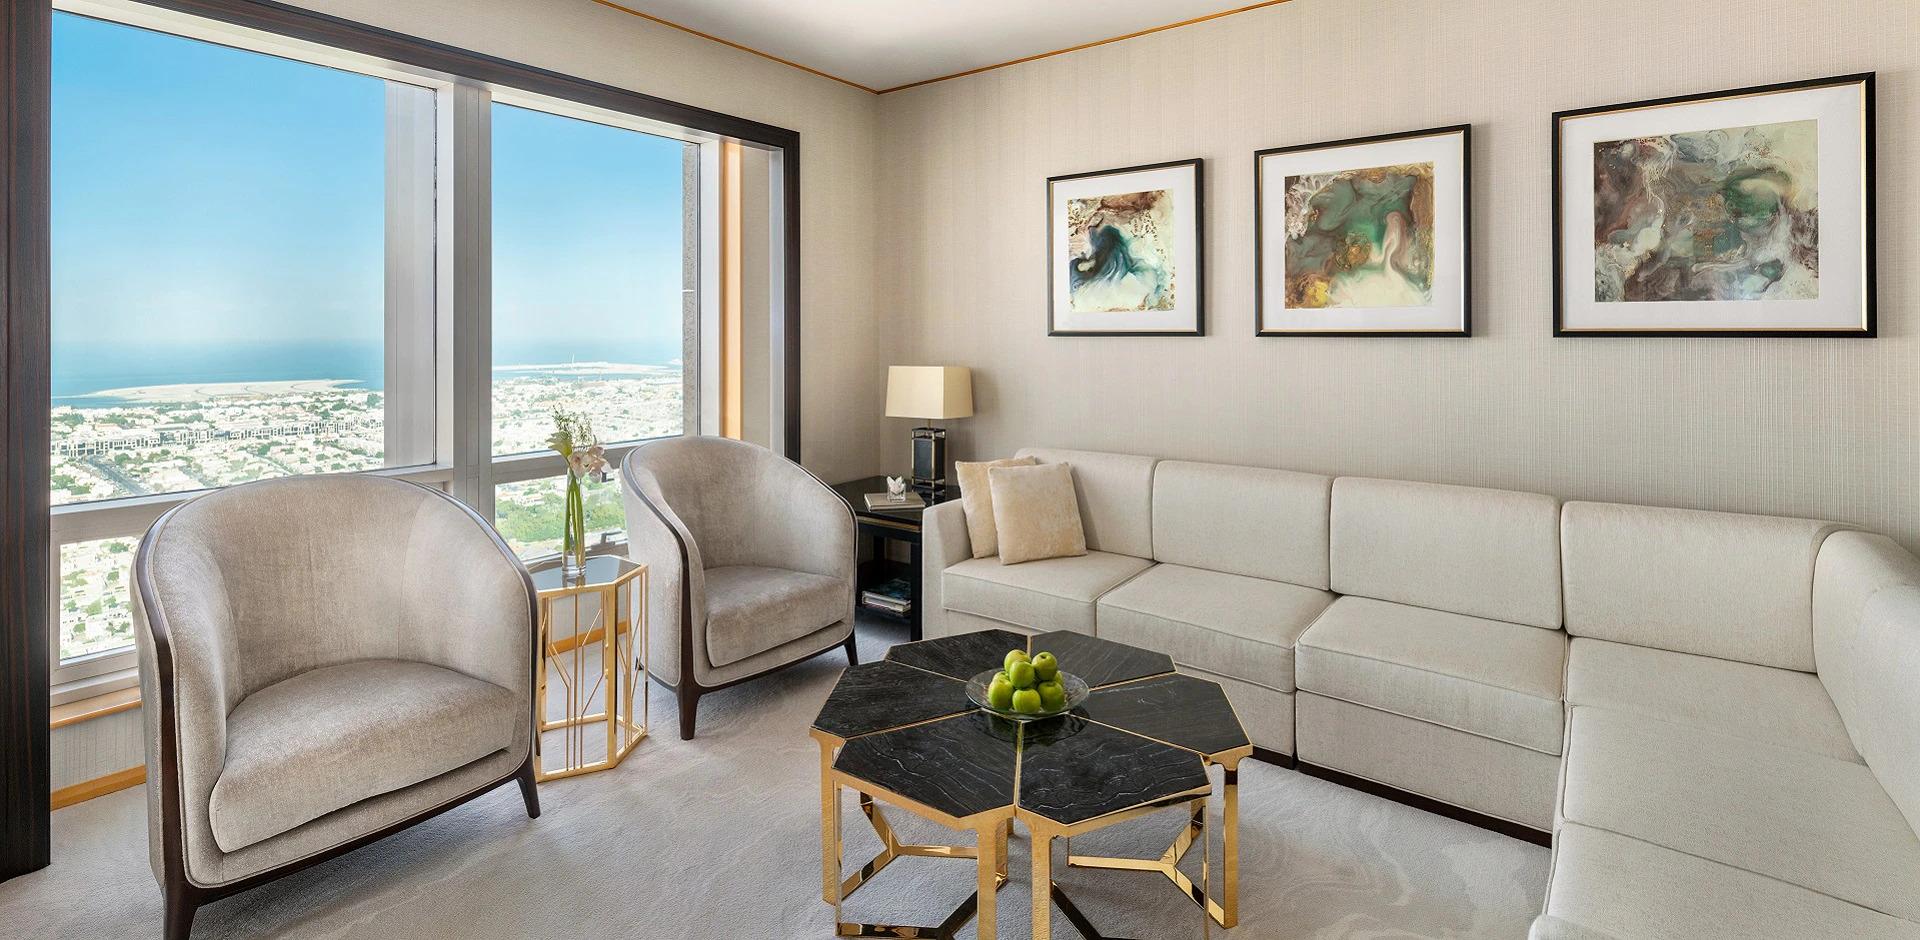 Shangri-La Dubai Suite Living Room